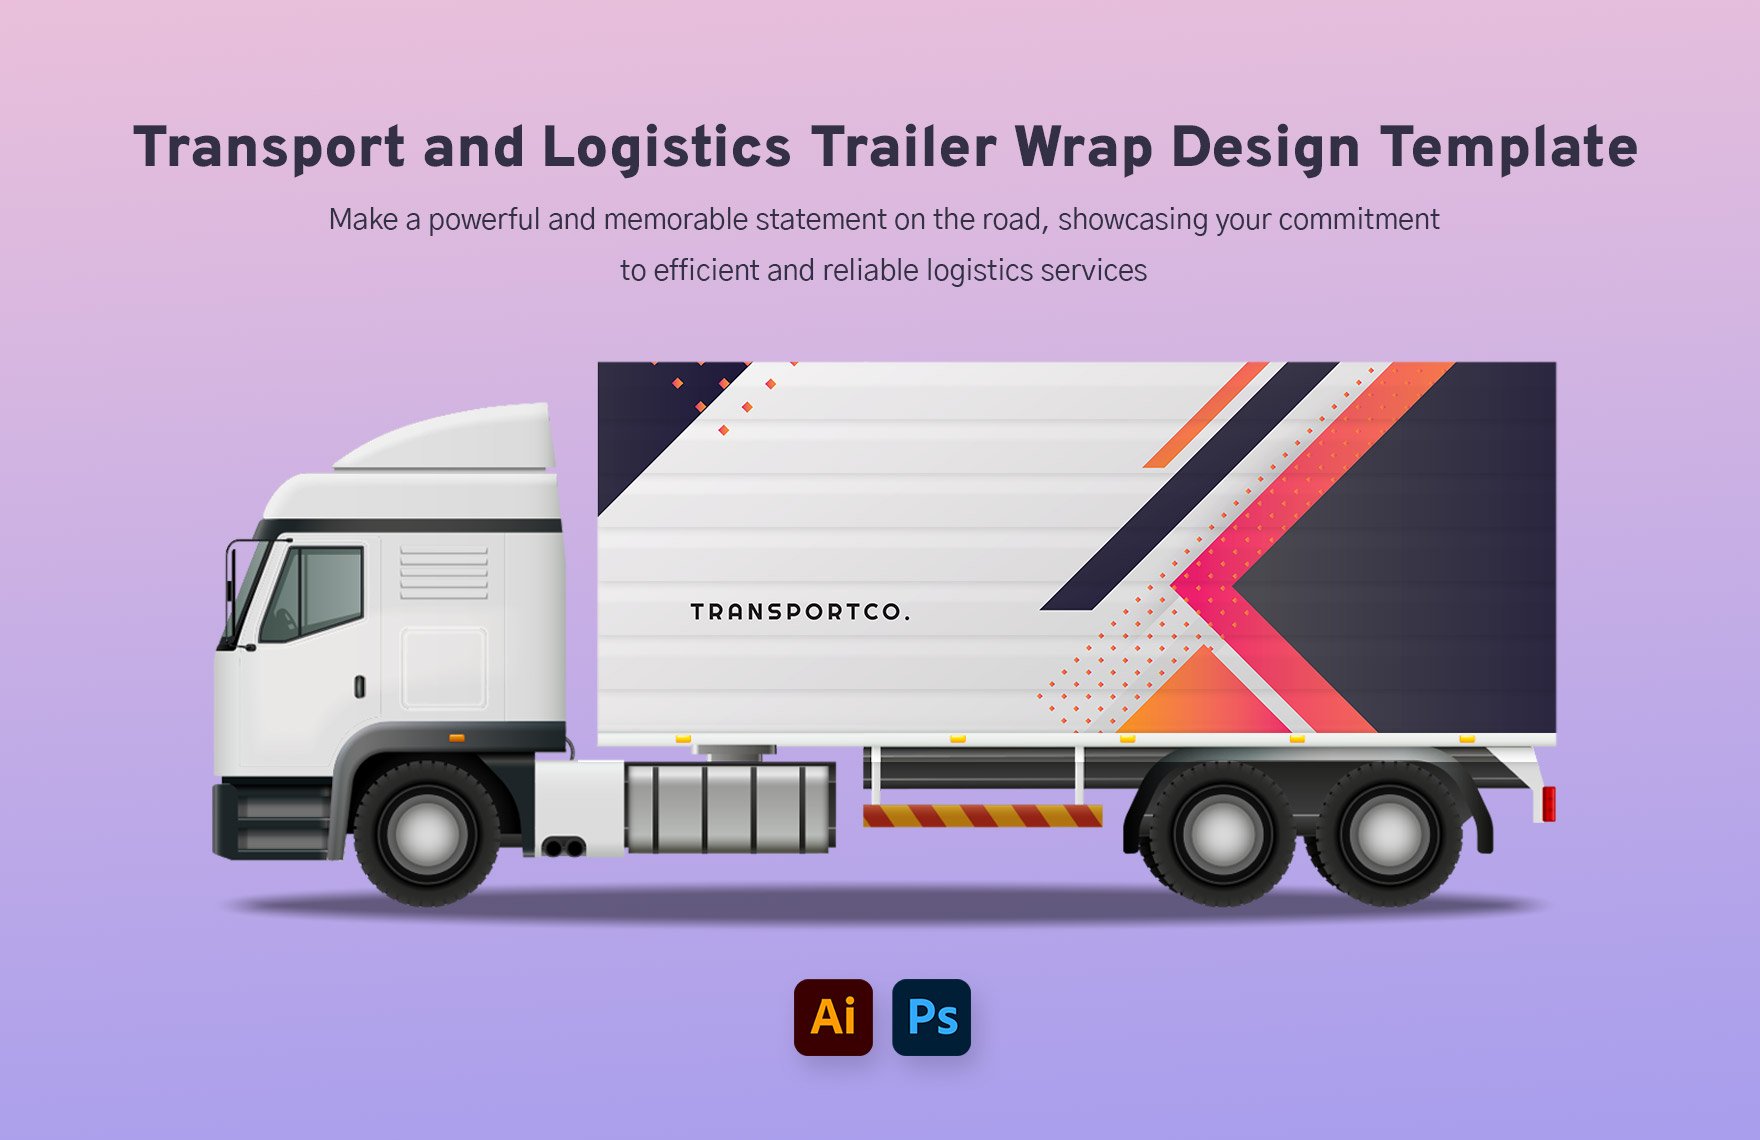 Transport and Logistics Trailer Wrap Design Template in Illustrator, PSD